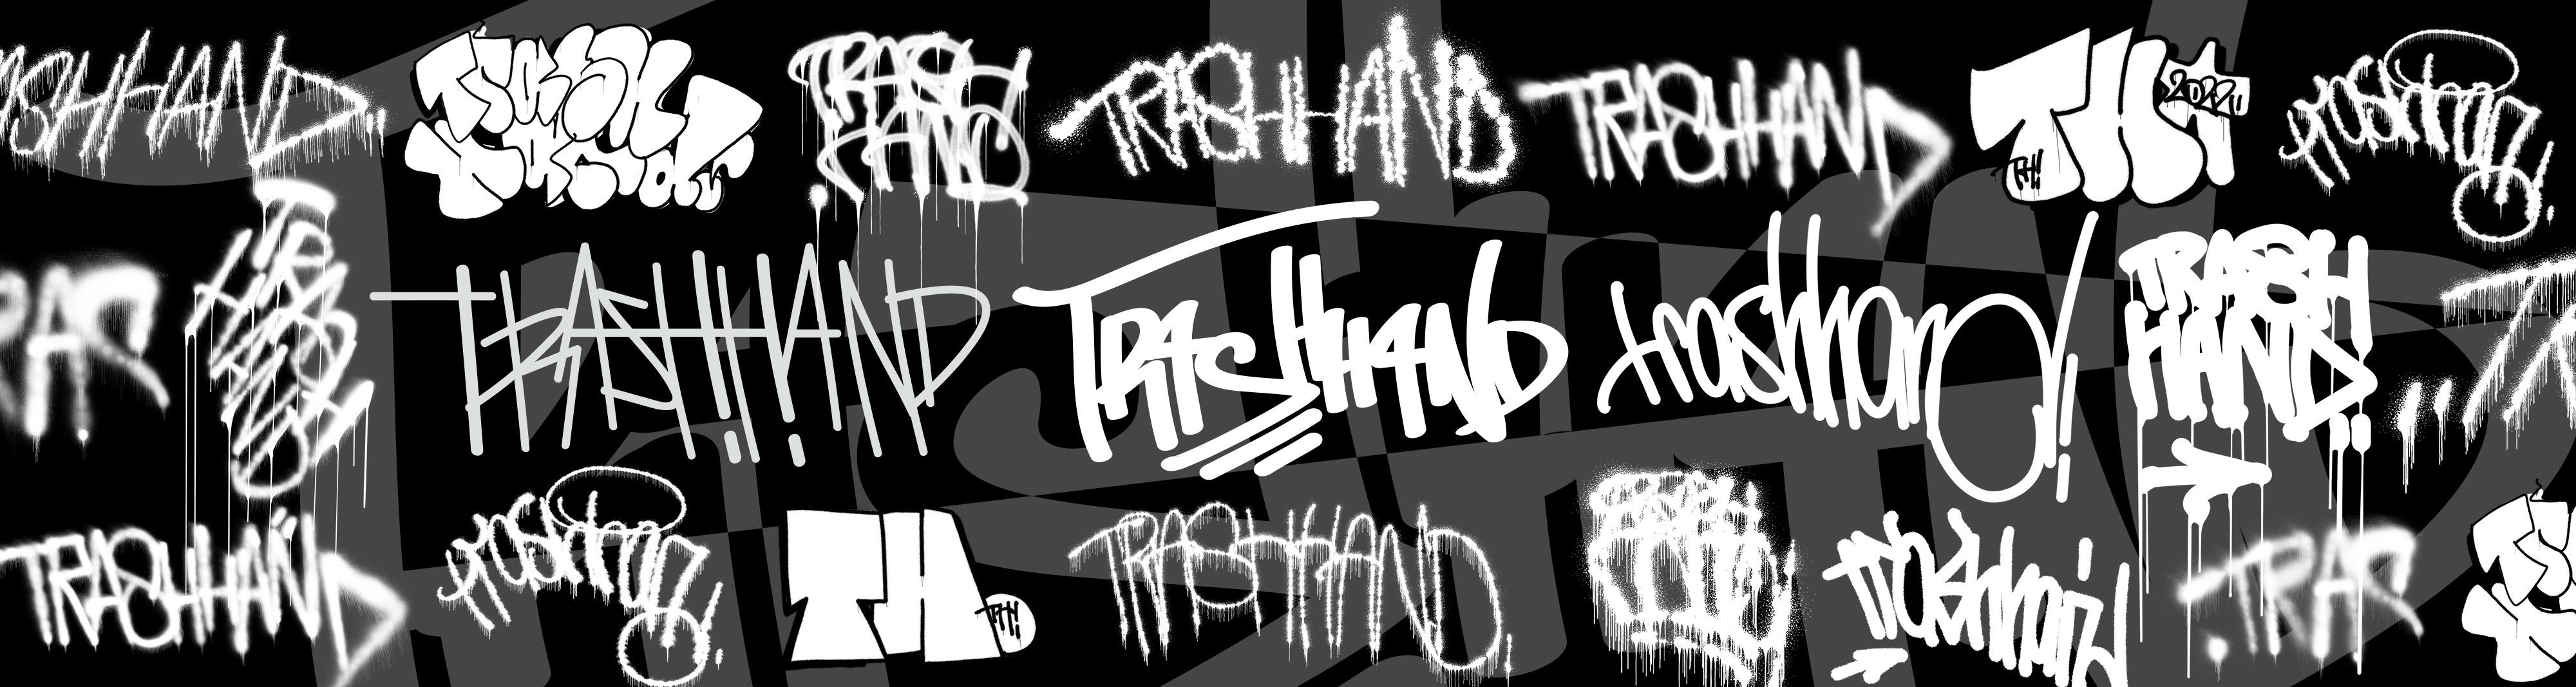 trashhand banner